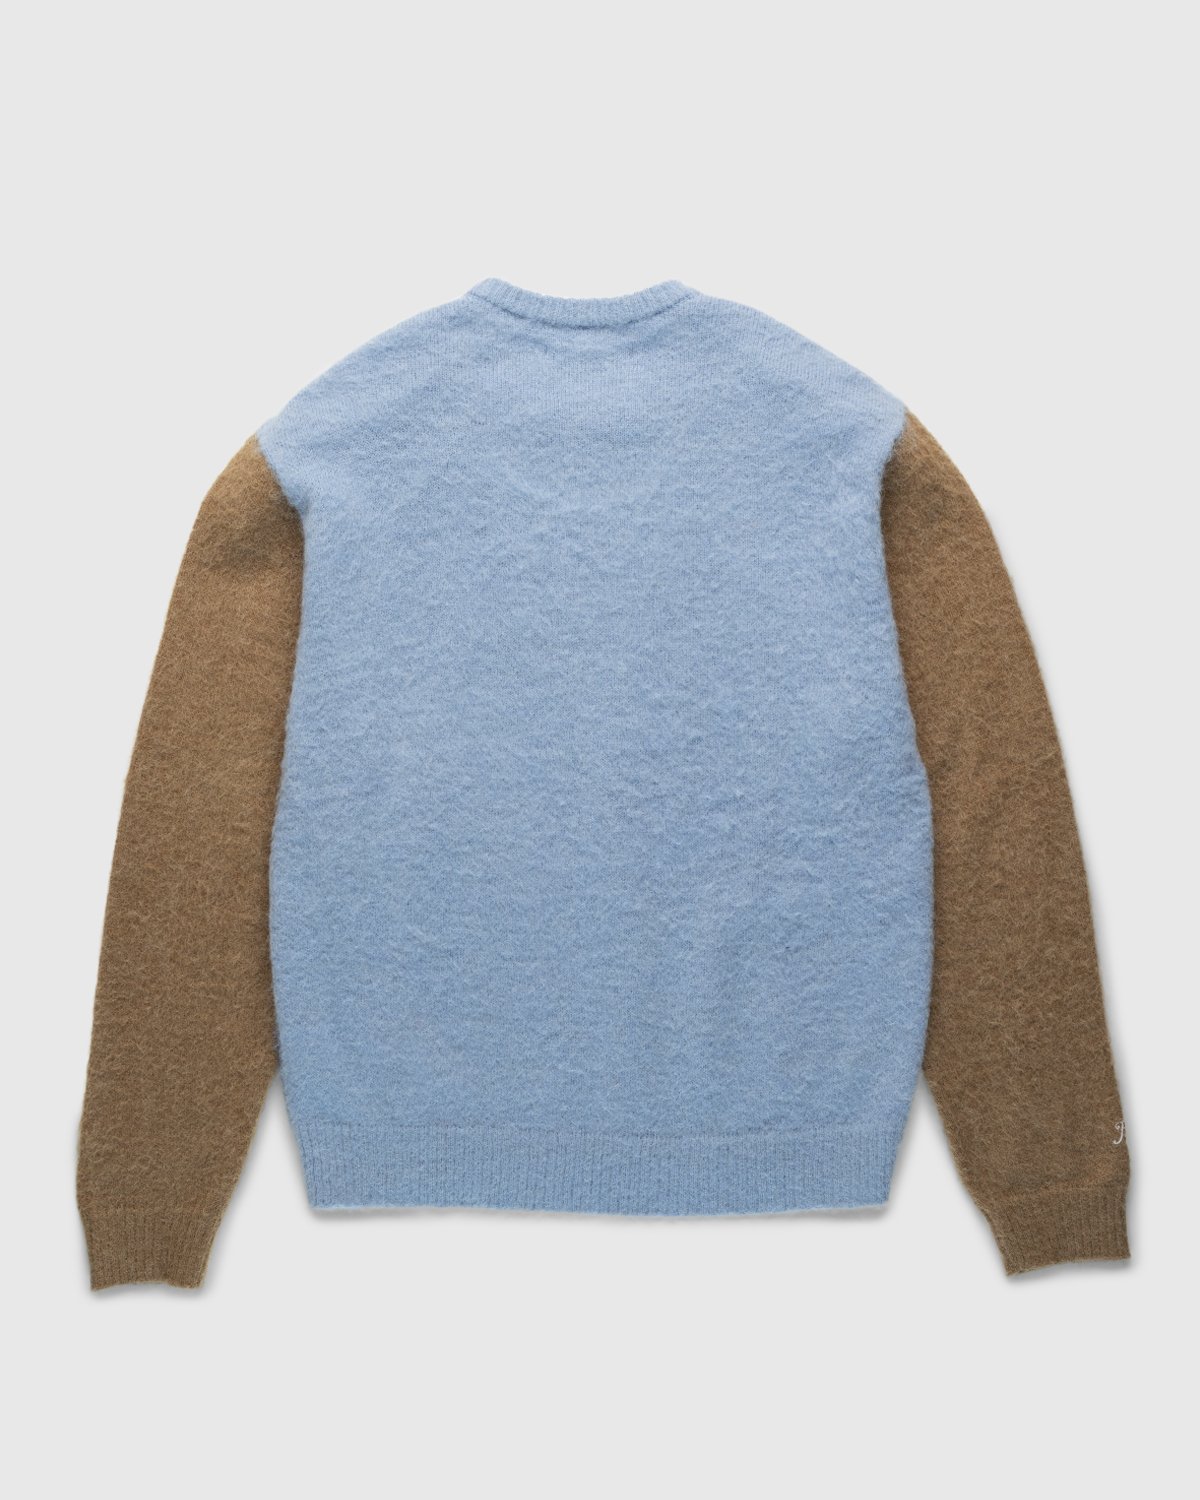 Highsnobiety - Check Alpaca Sweater Multi Blue - Clothing - Blue - Image 2